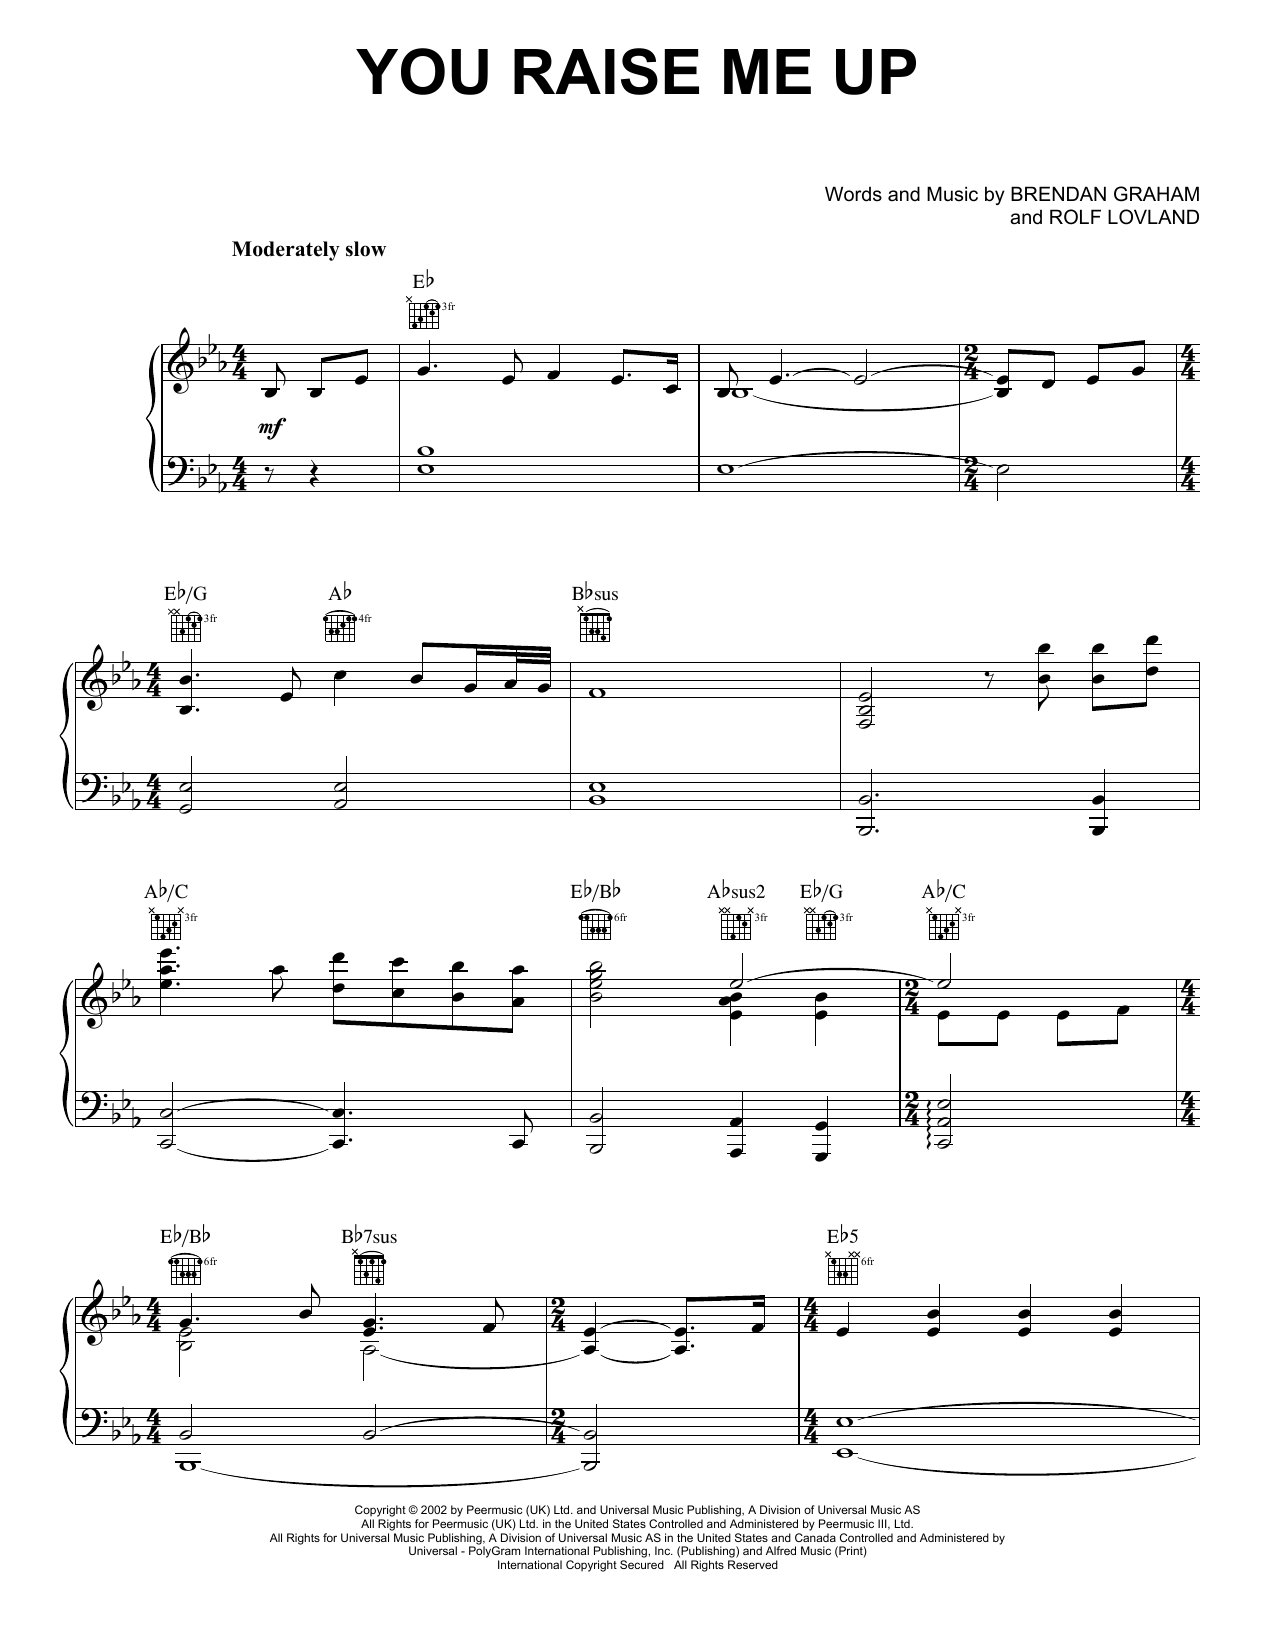 Josh Groban You Raise Me Up sheet music notes and chords. Download Printable PDF.